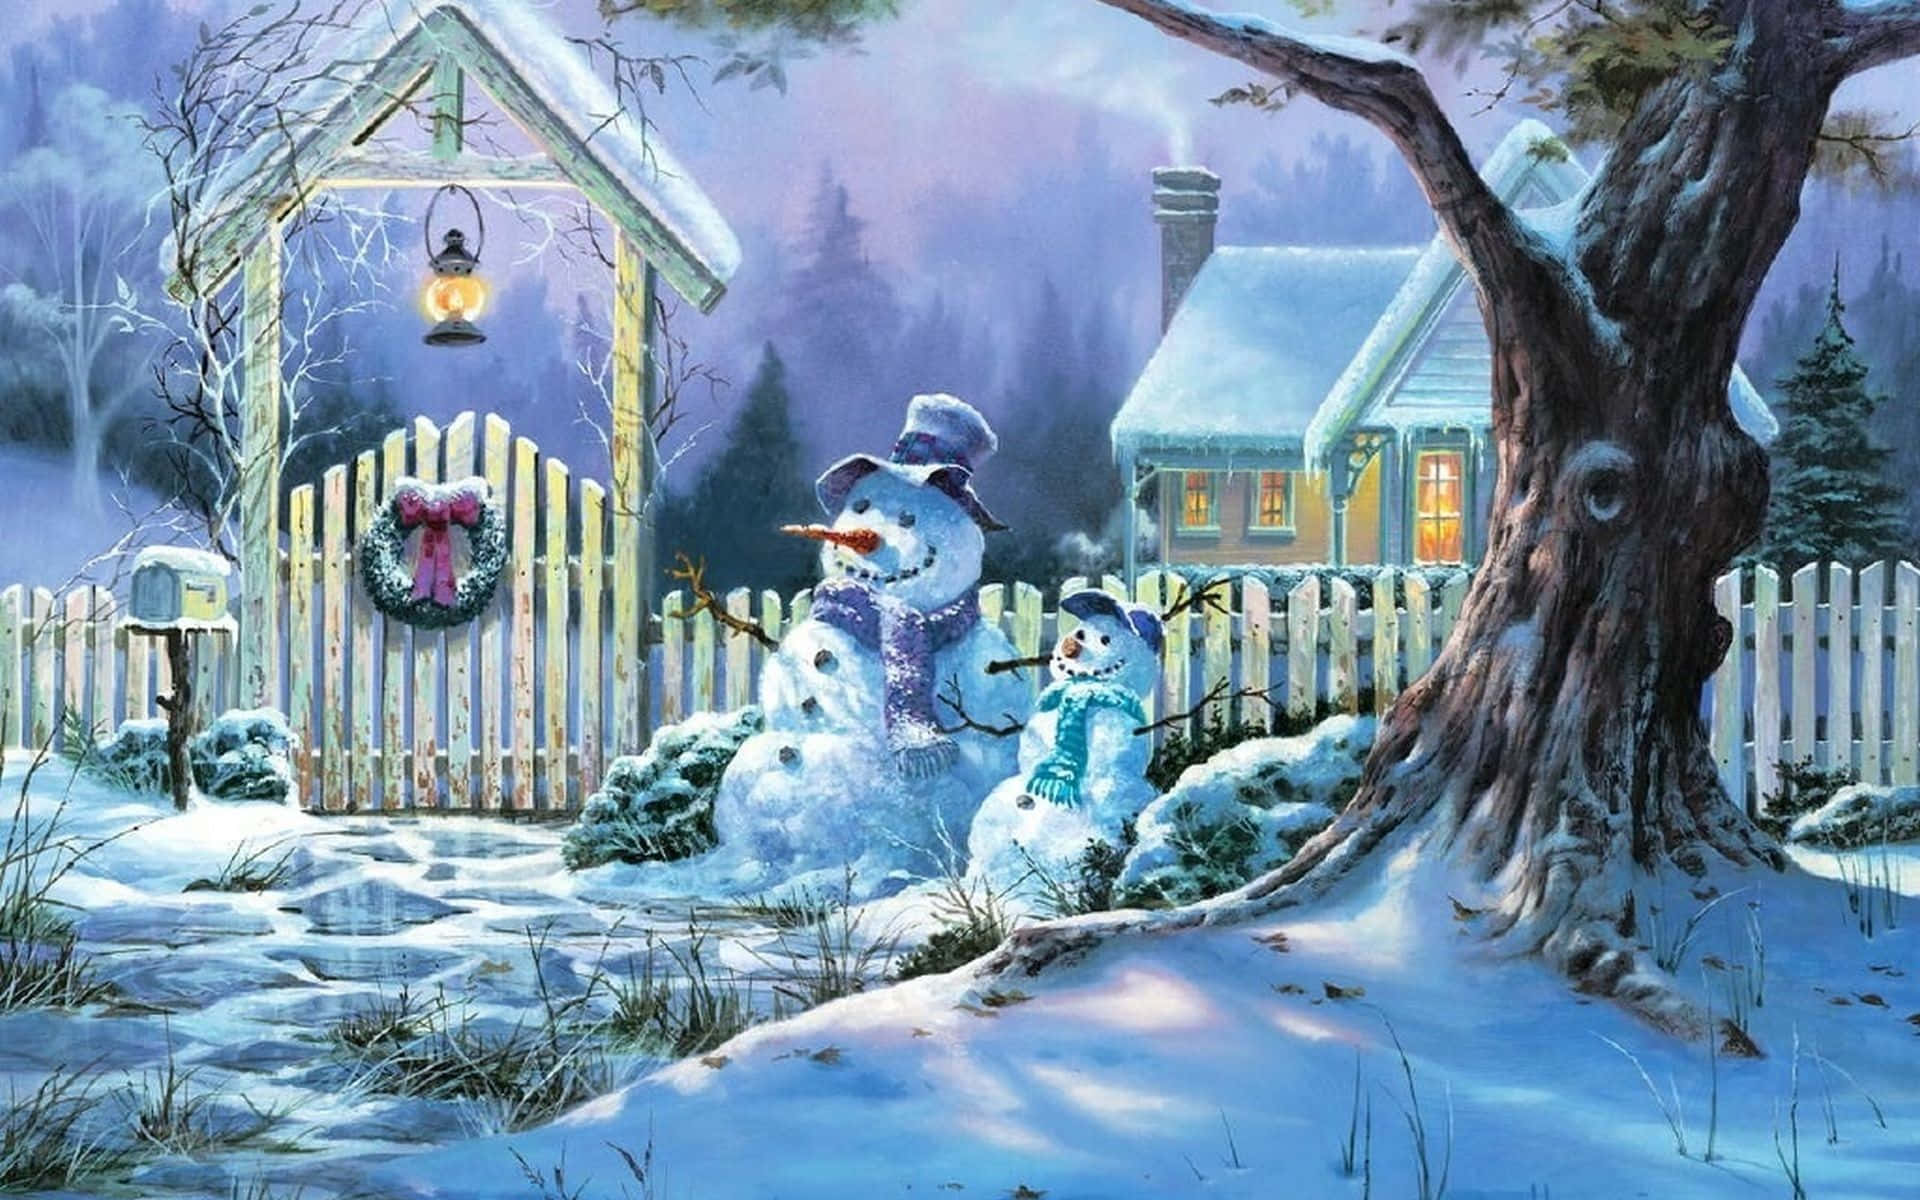 Cheerful Snowy Christmas Scene